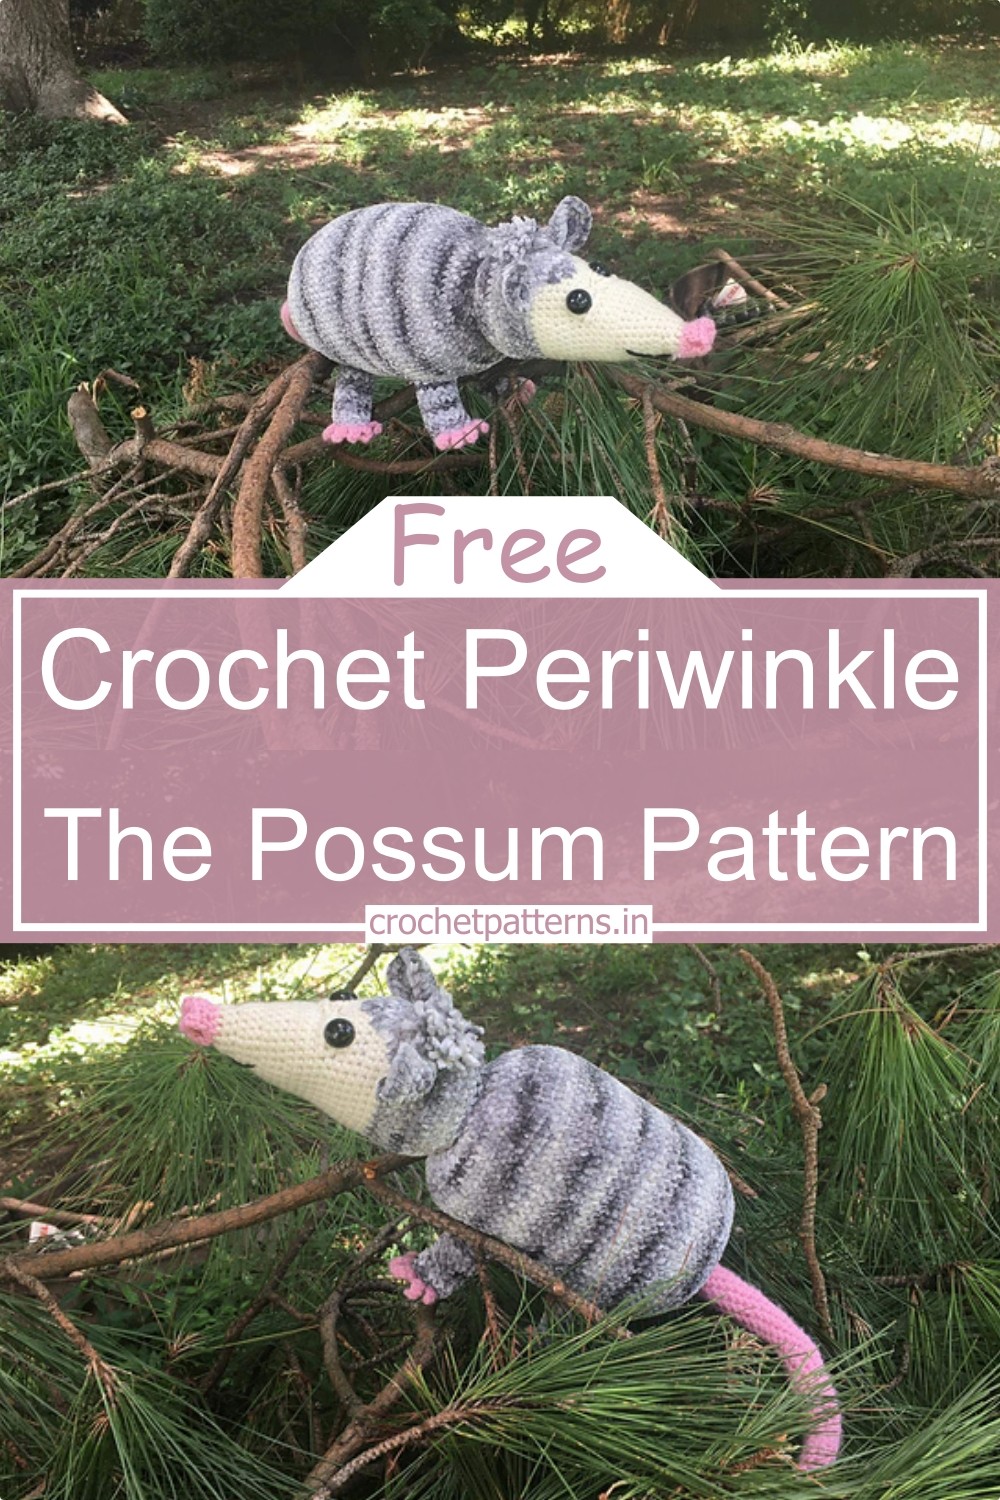 Crochet Periwinkle The Possum Pattern